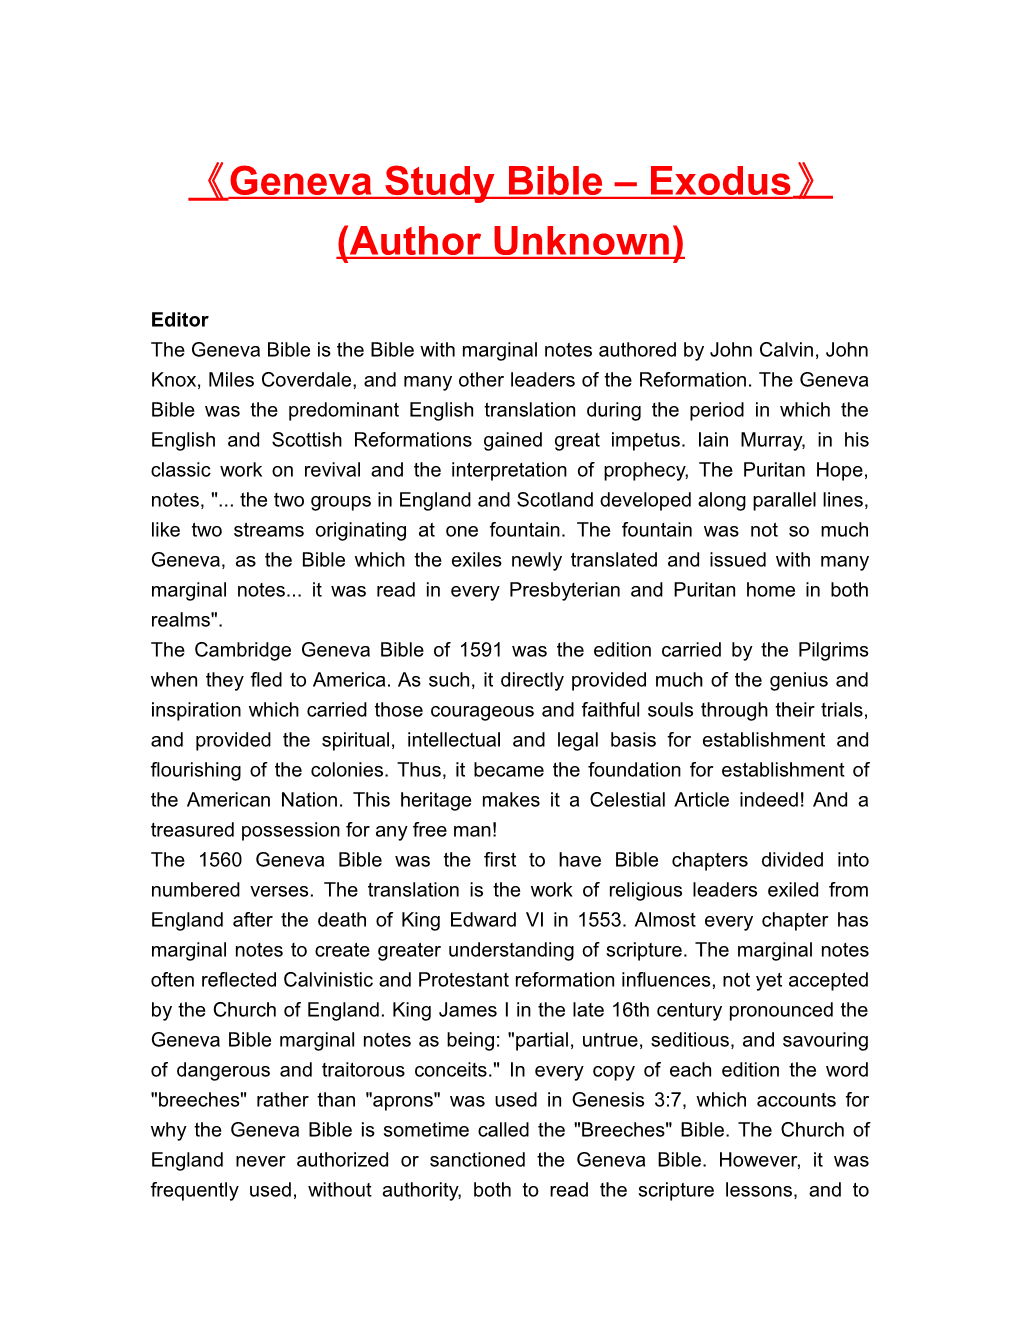 Geneva Study Bible Exodus (Author Unknown)